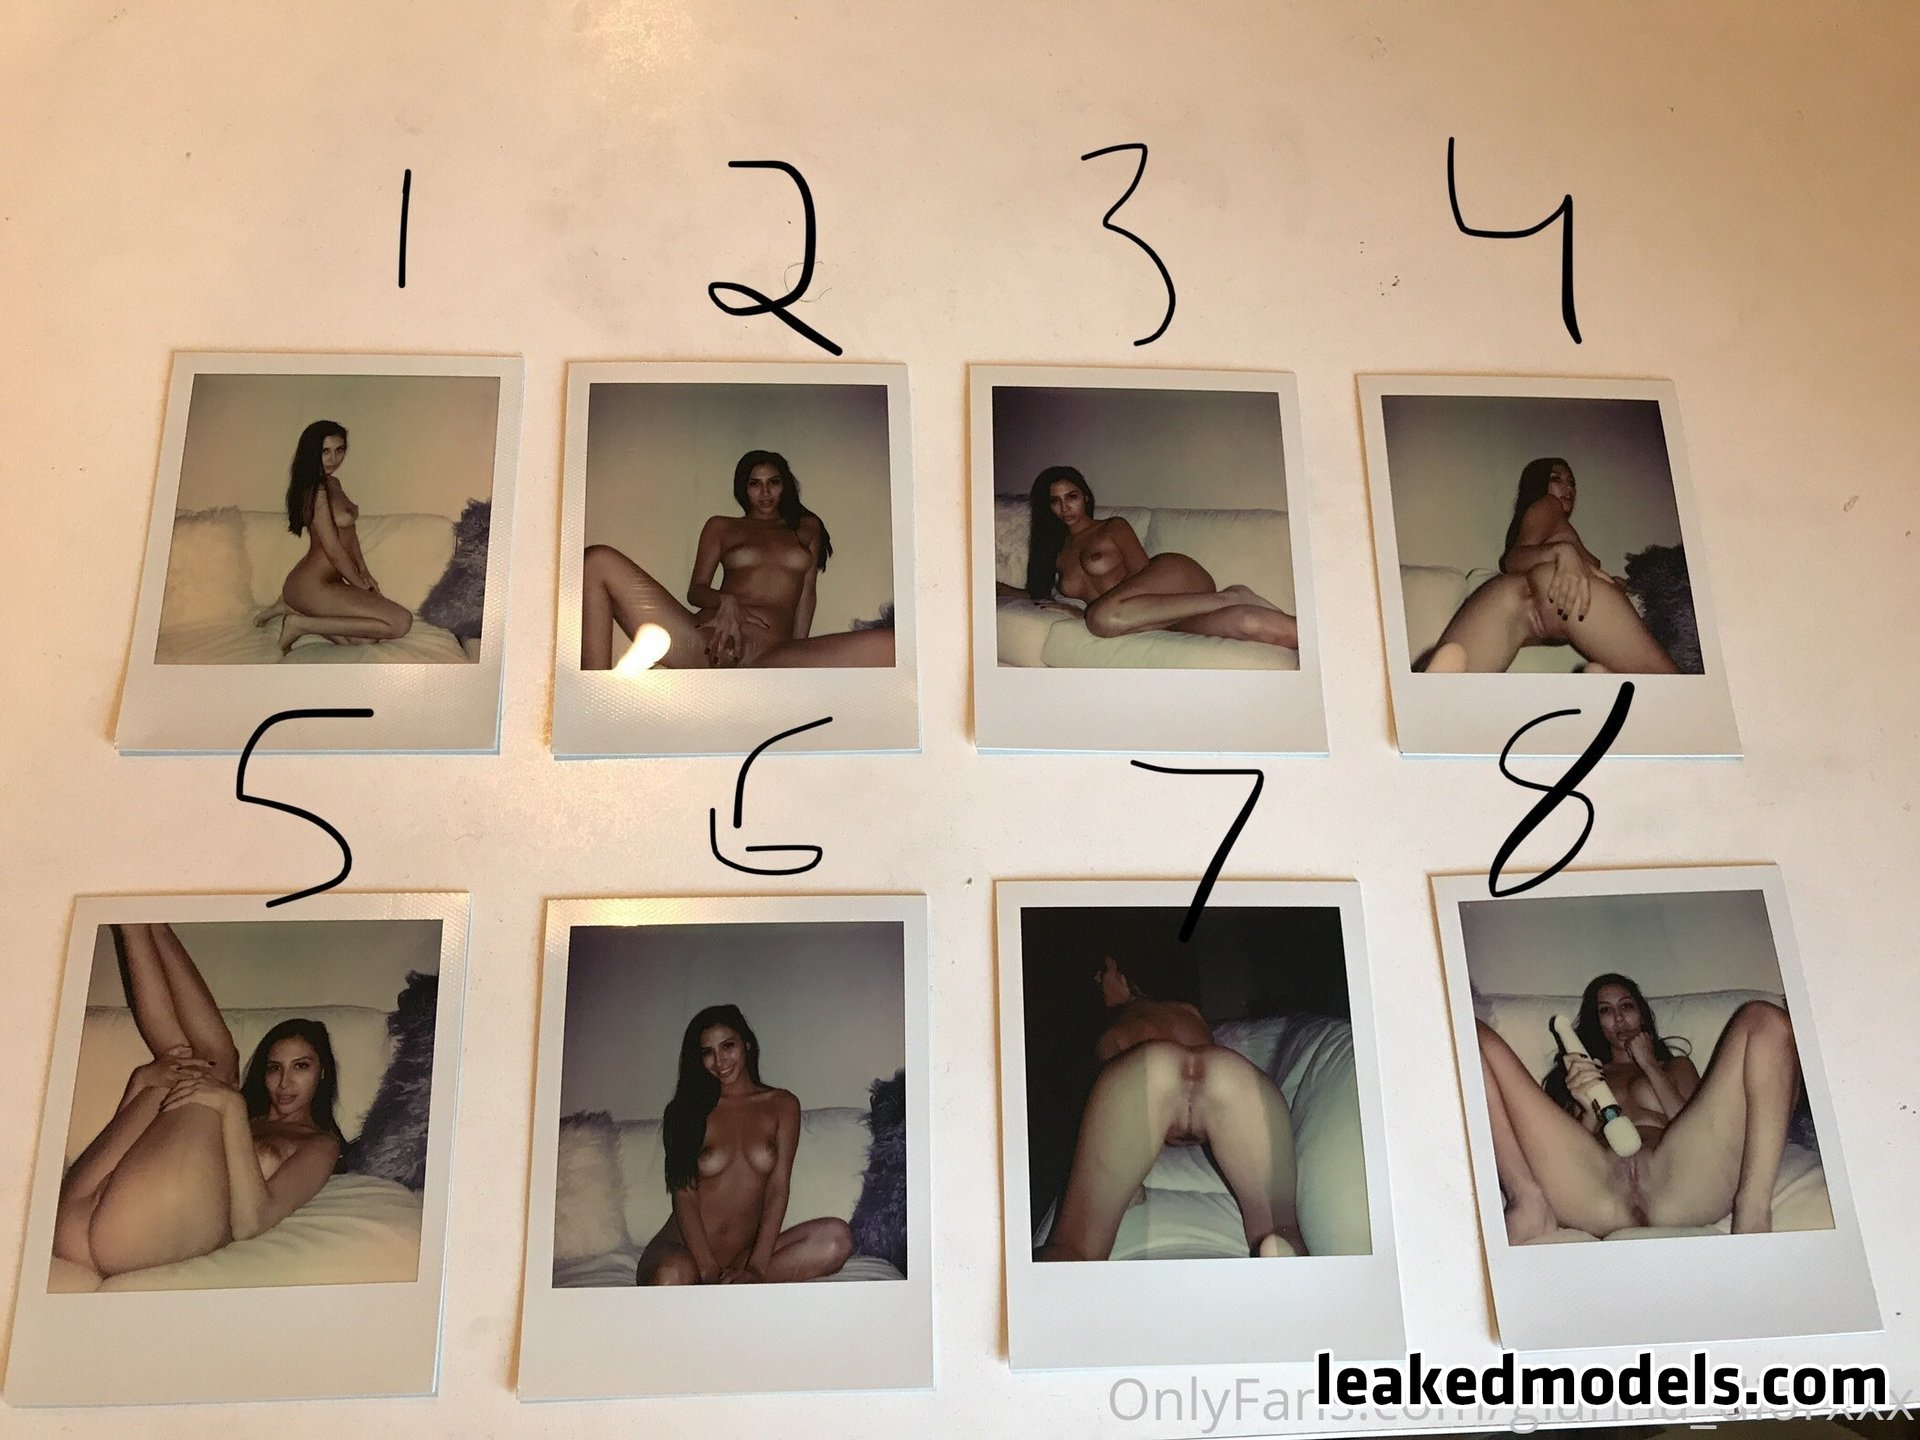 gianna diorxxx nude leaks leakedmodels.com 003 - Gianna Diorxxx Nude (12 Photos + 2 Videos)